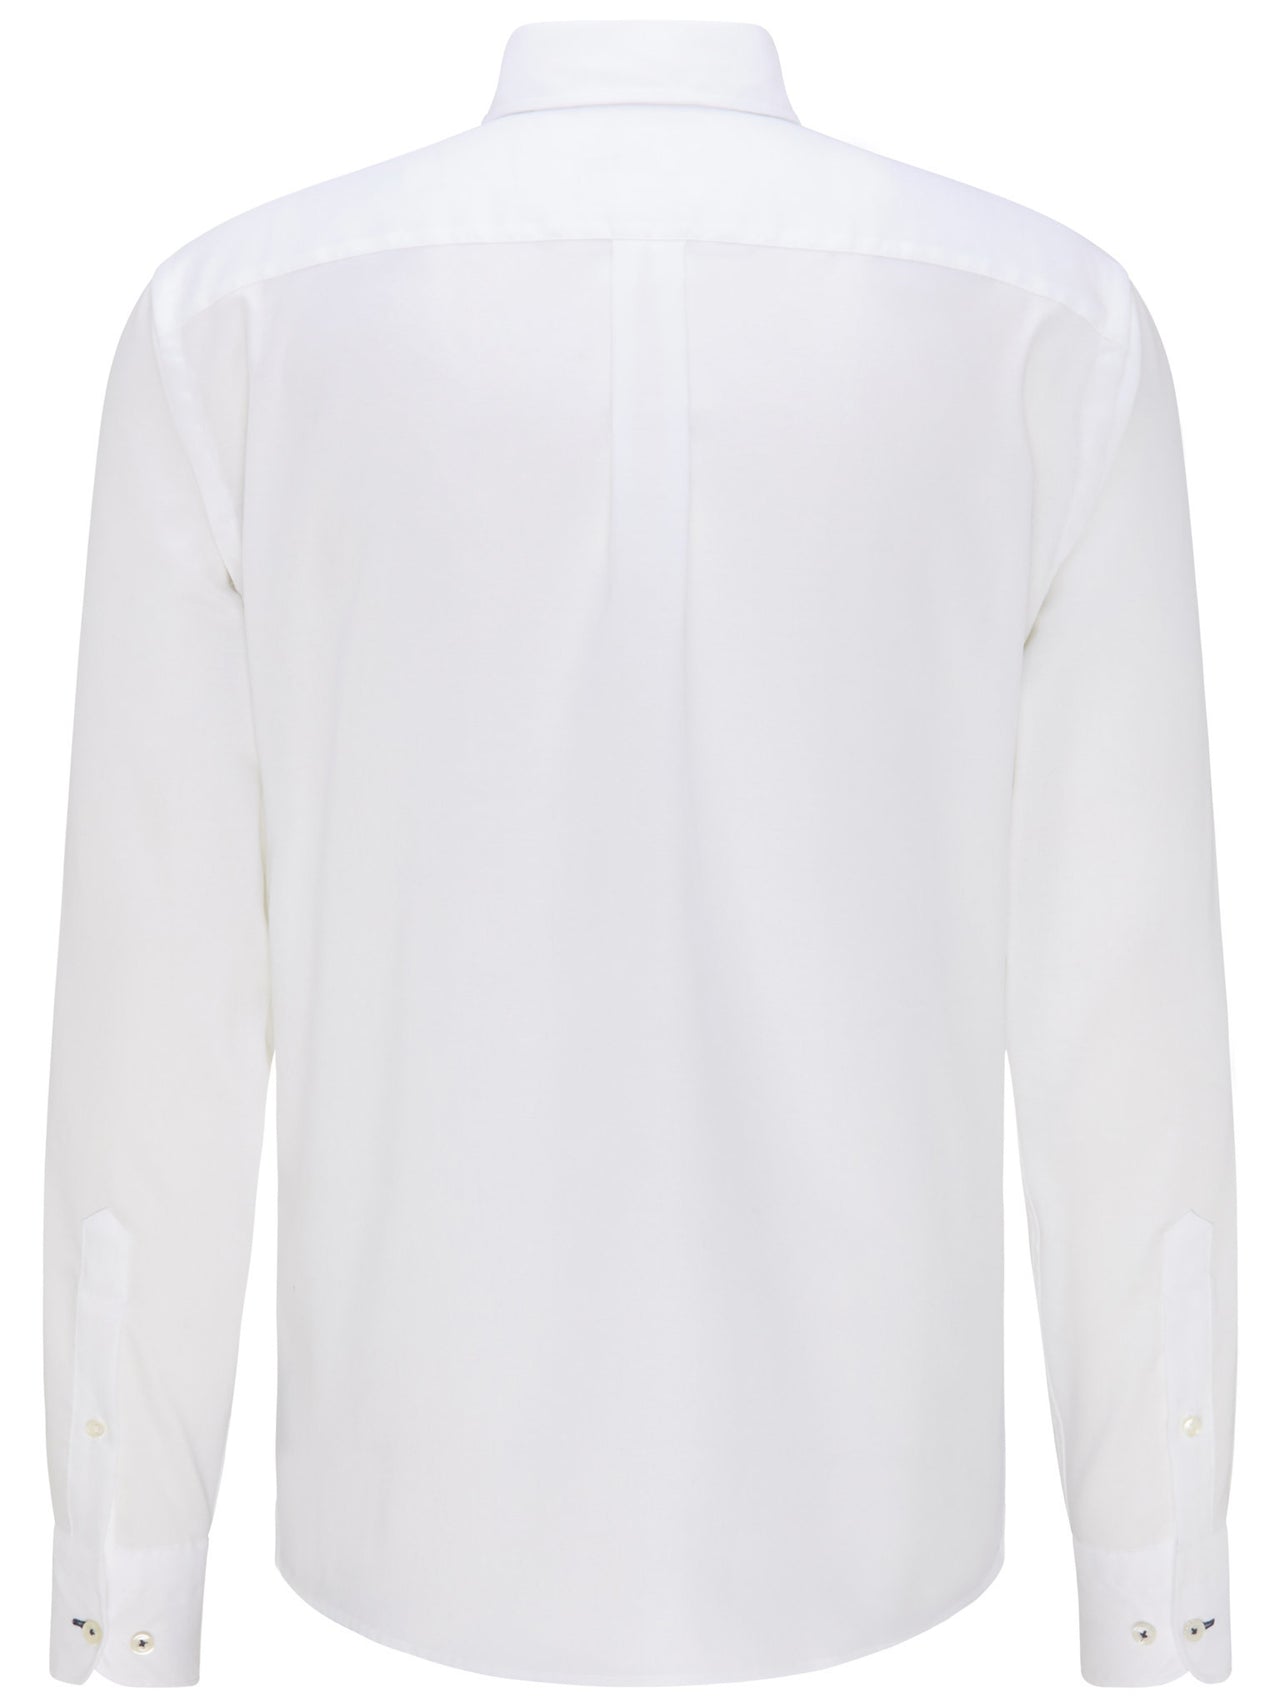 Fynch Hatton All Season Oxford Shirt in White